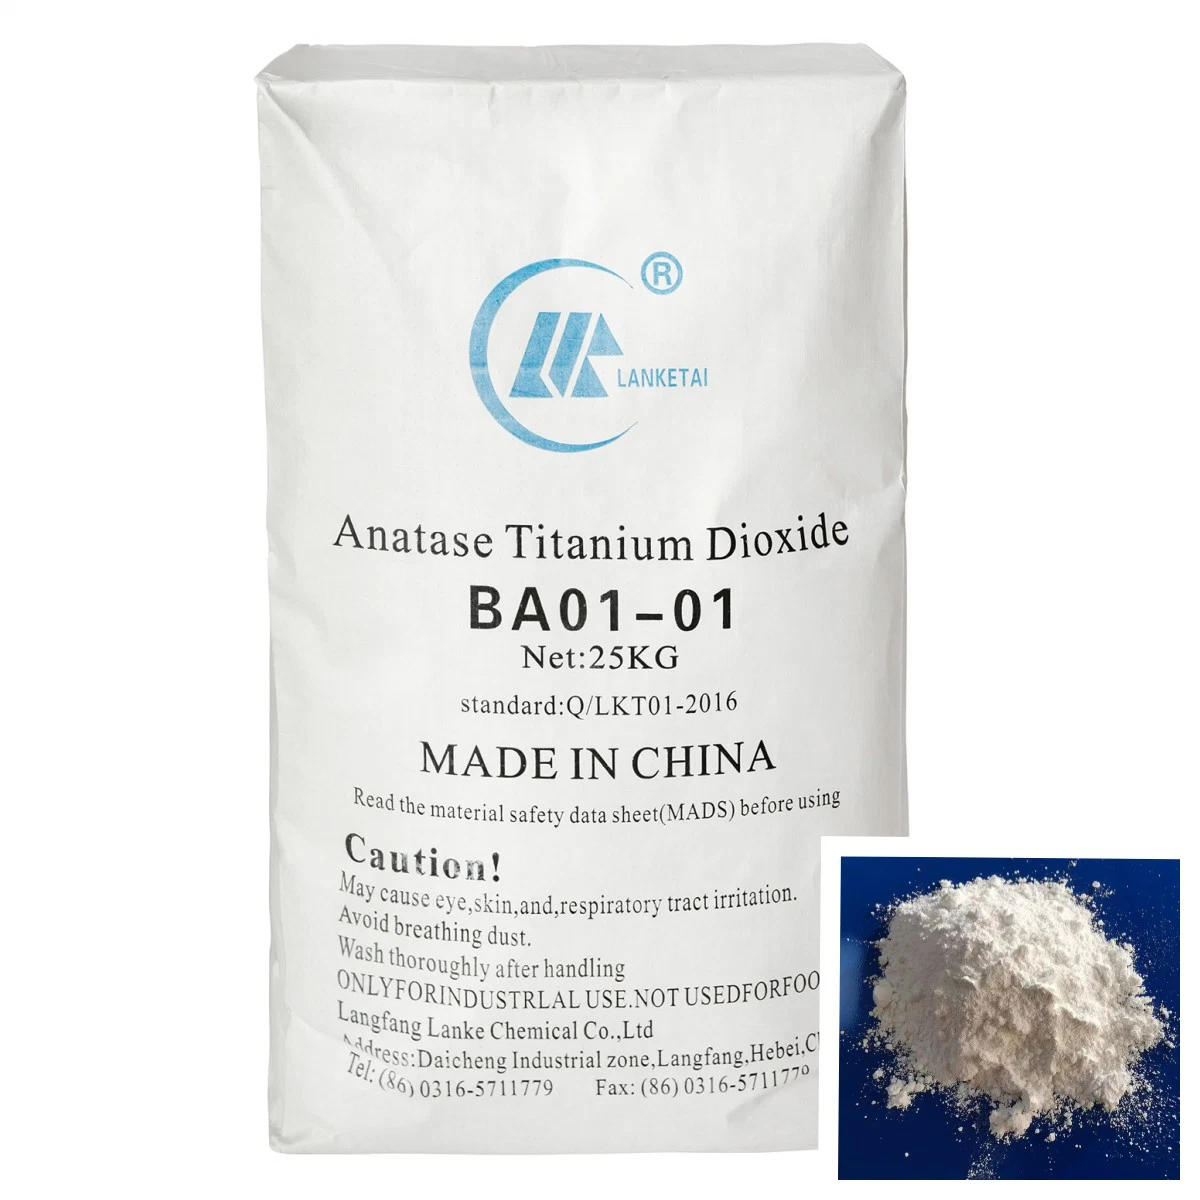 Prix de gros de grade de rutile/Grade Dioxyde de titane anatase (BA01-01) Pigment Dye les produits chimiques